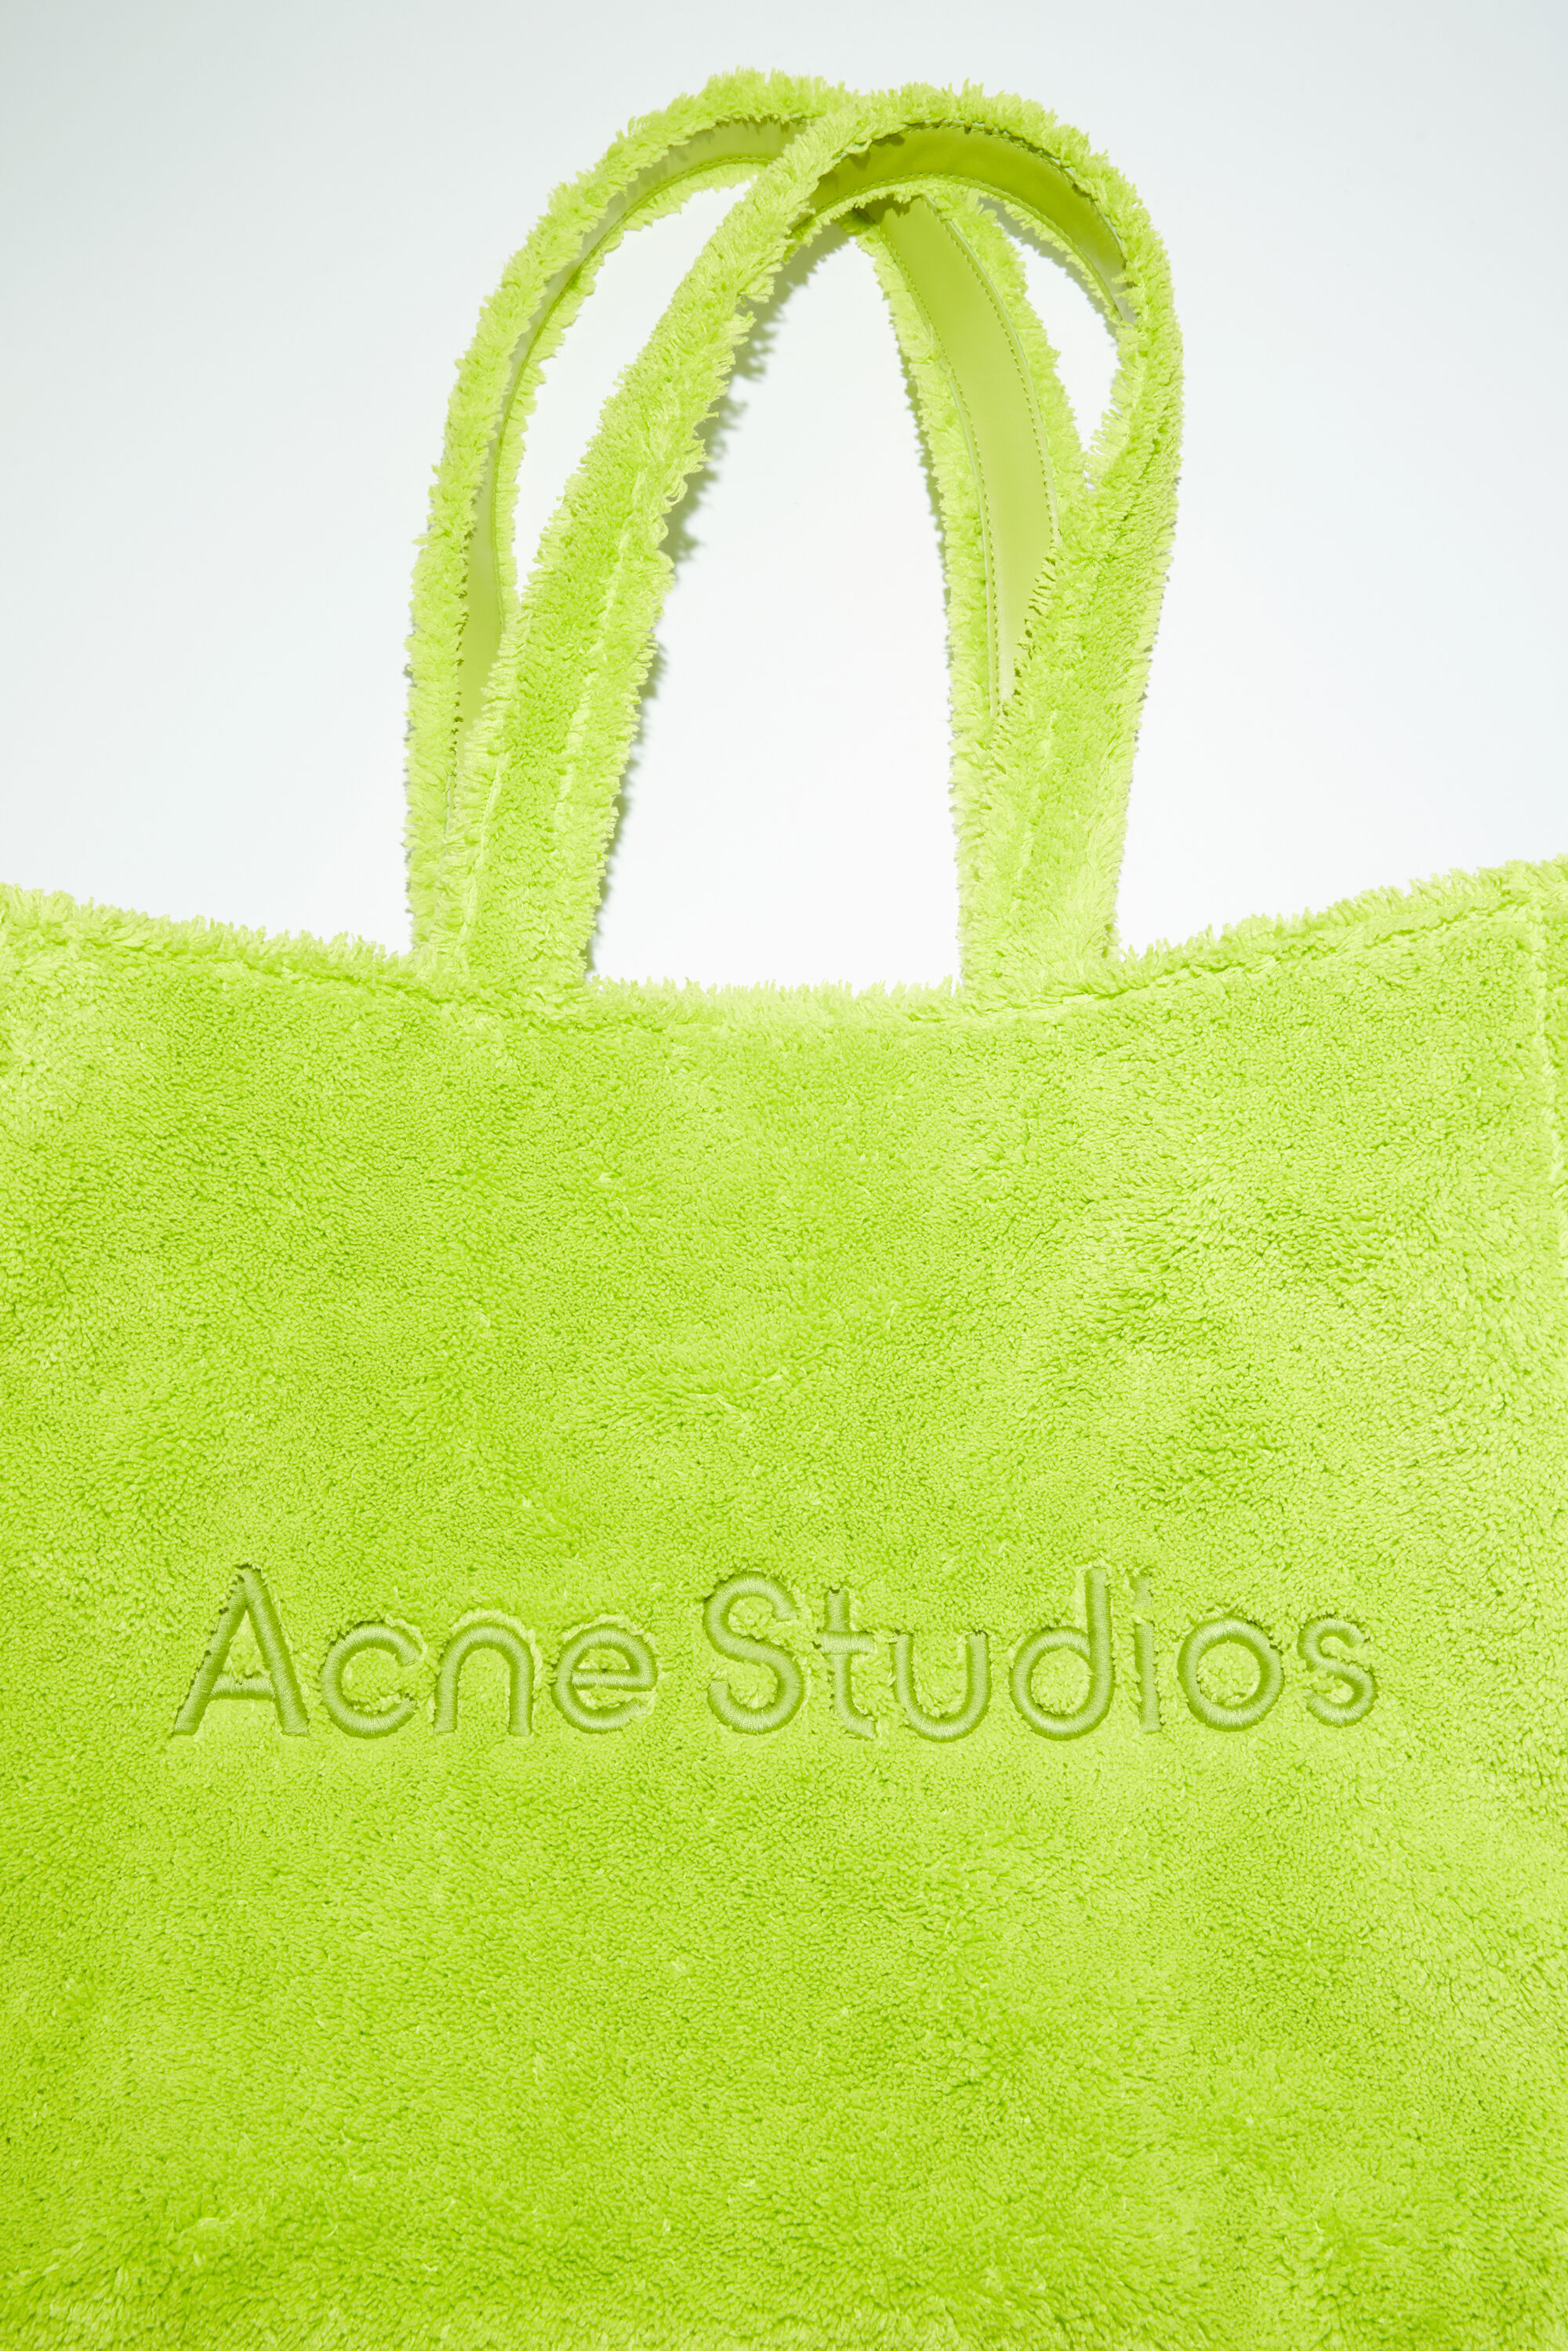 Acne Studios - Furry logo shoulder tote bag - Lime green